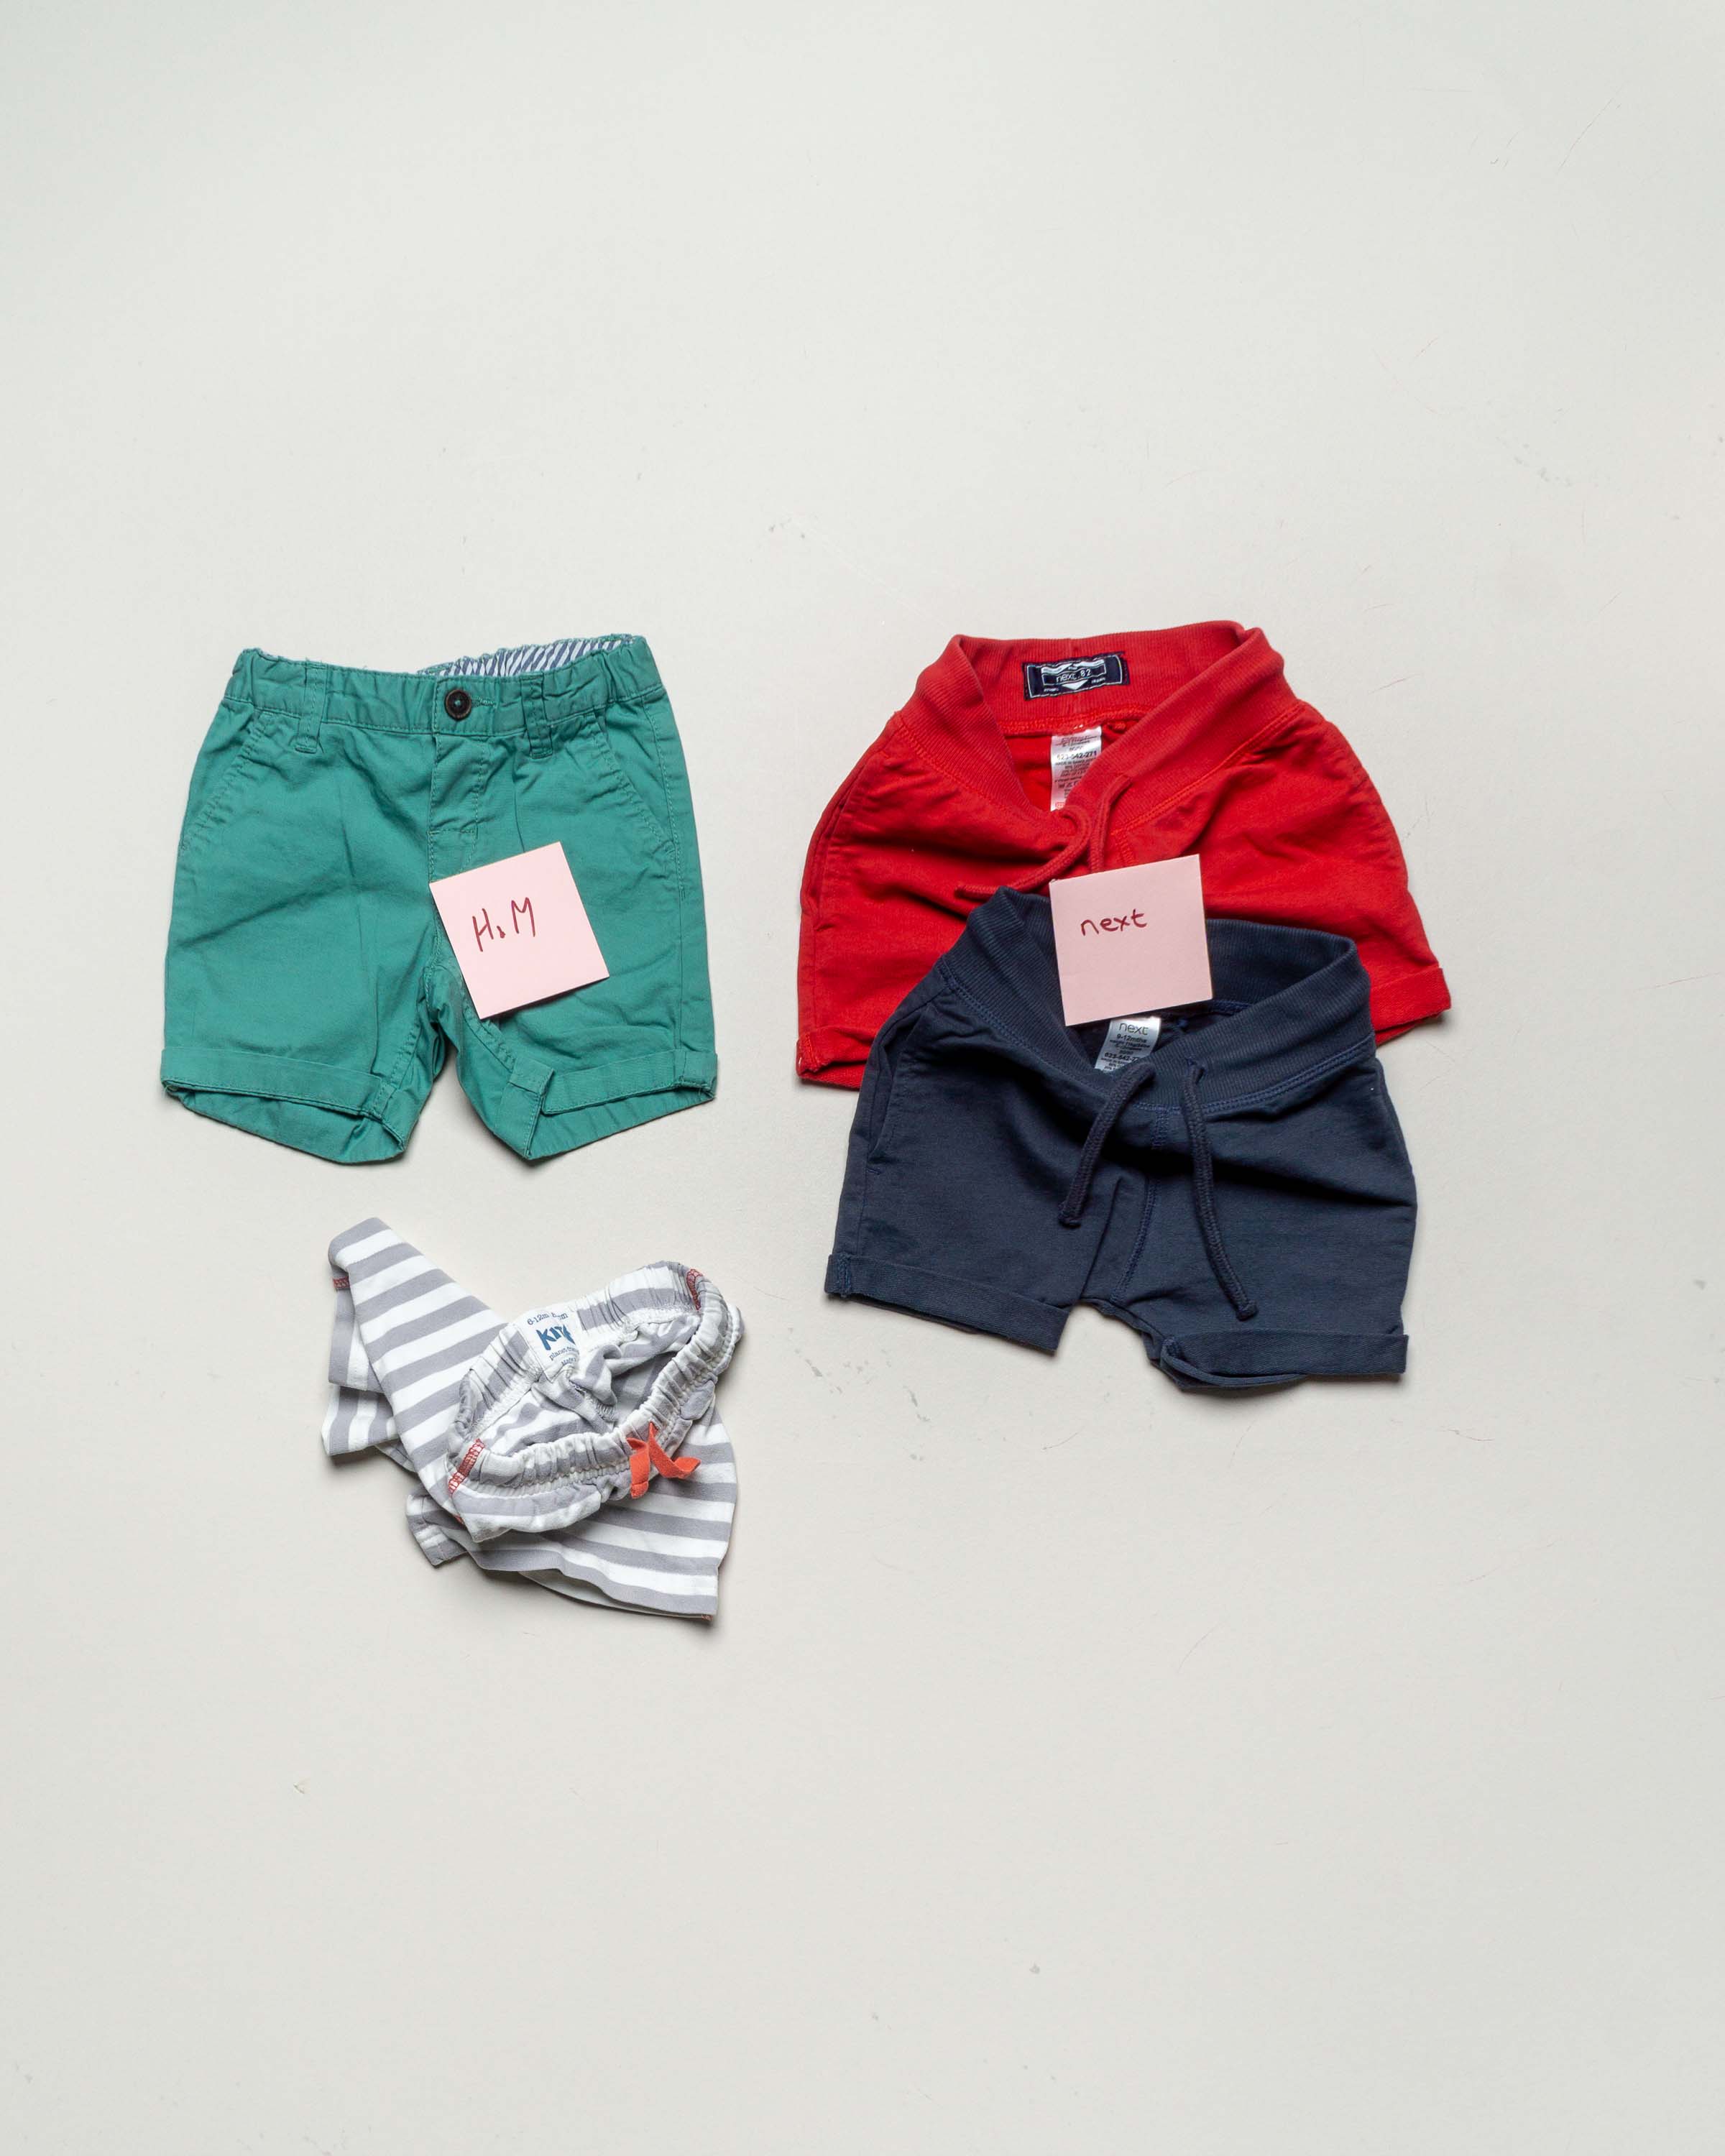 4 Shorts Gr. 80 – 2x Next bunt – kräftige Farben Muster Mädchen Jungen Set Pack